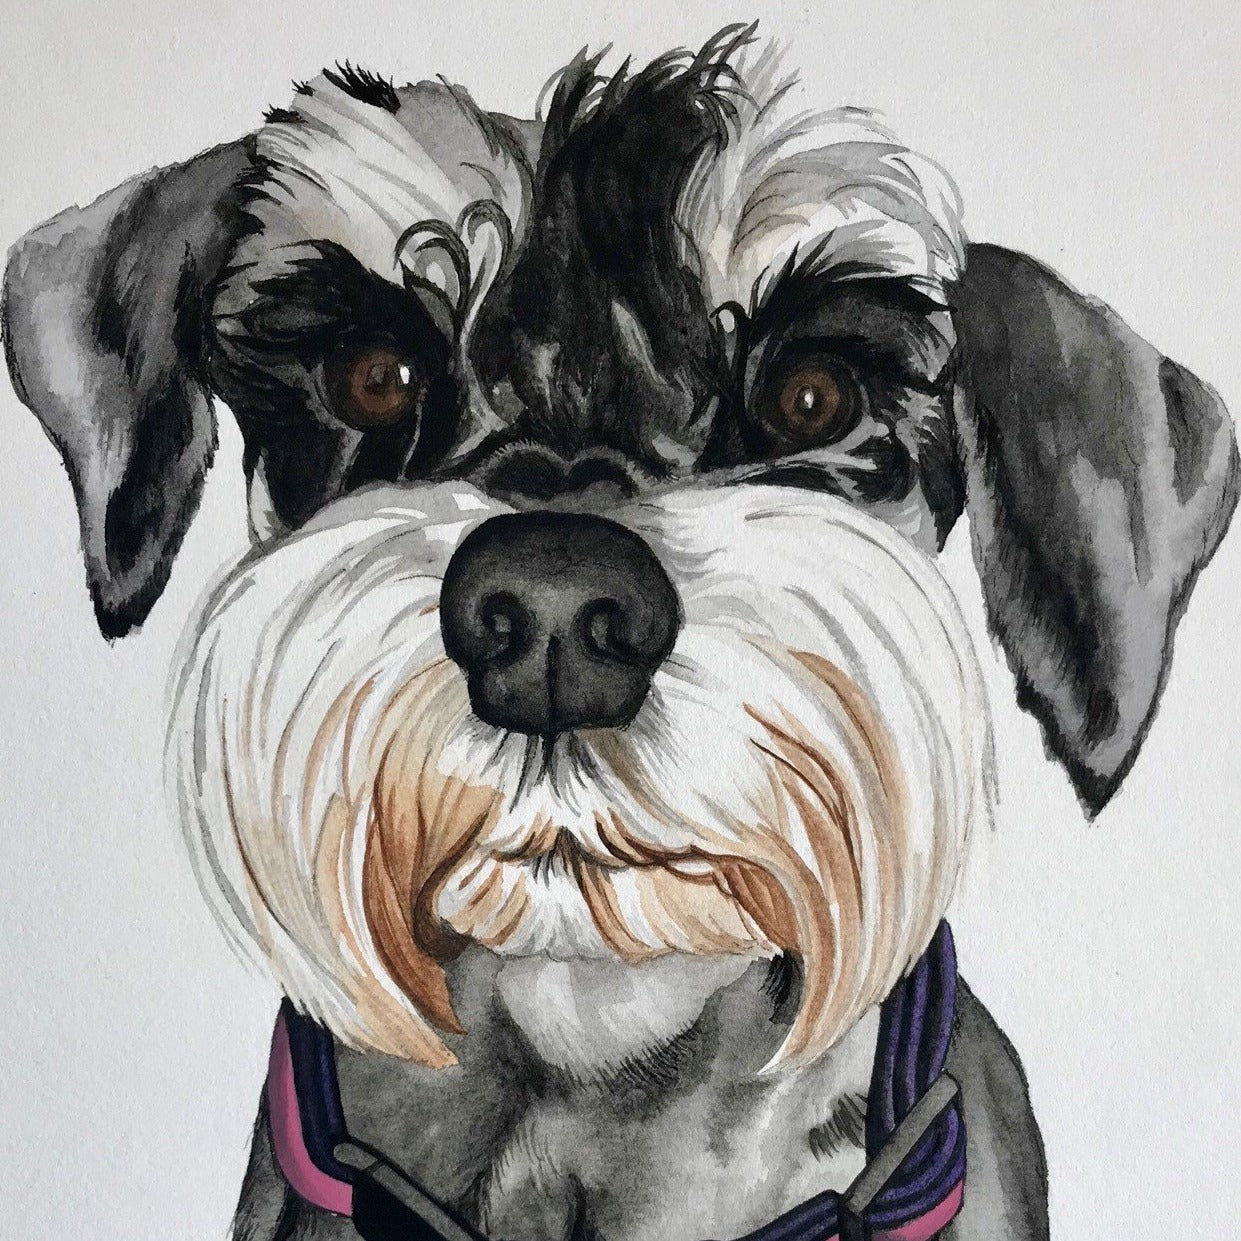 Crop of a painted watercolour portrait of a Miniature Schnauzer dog